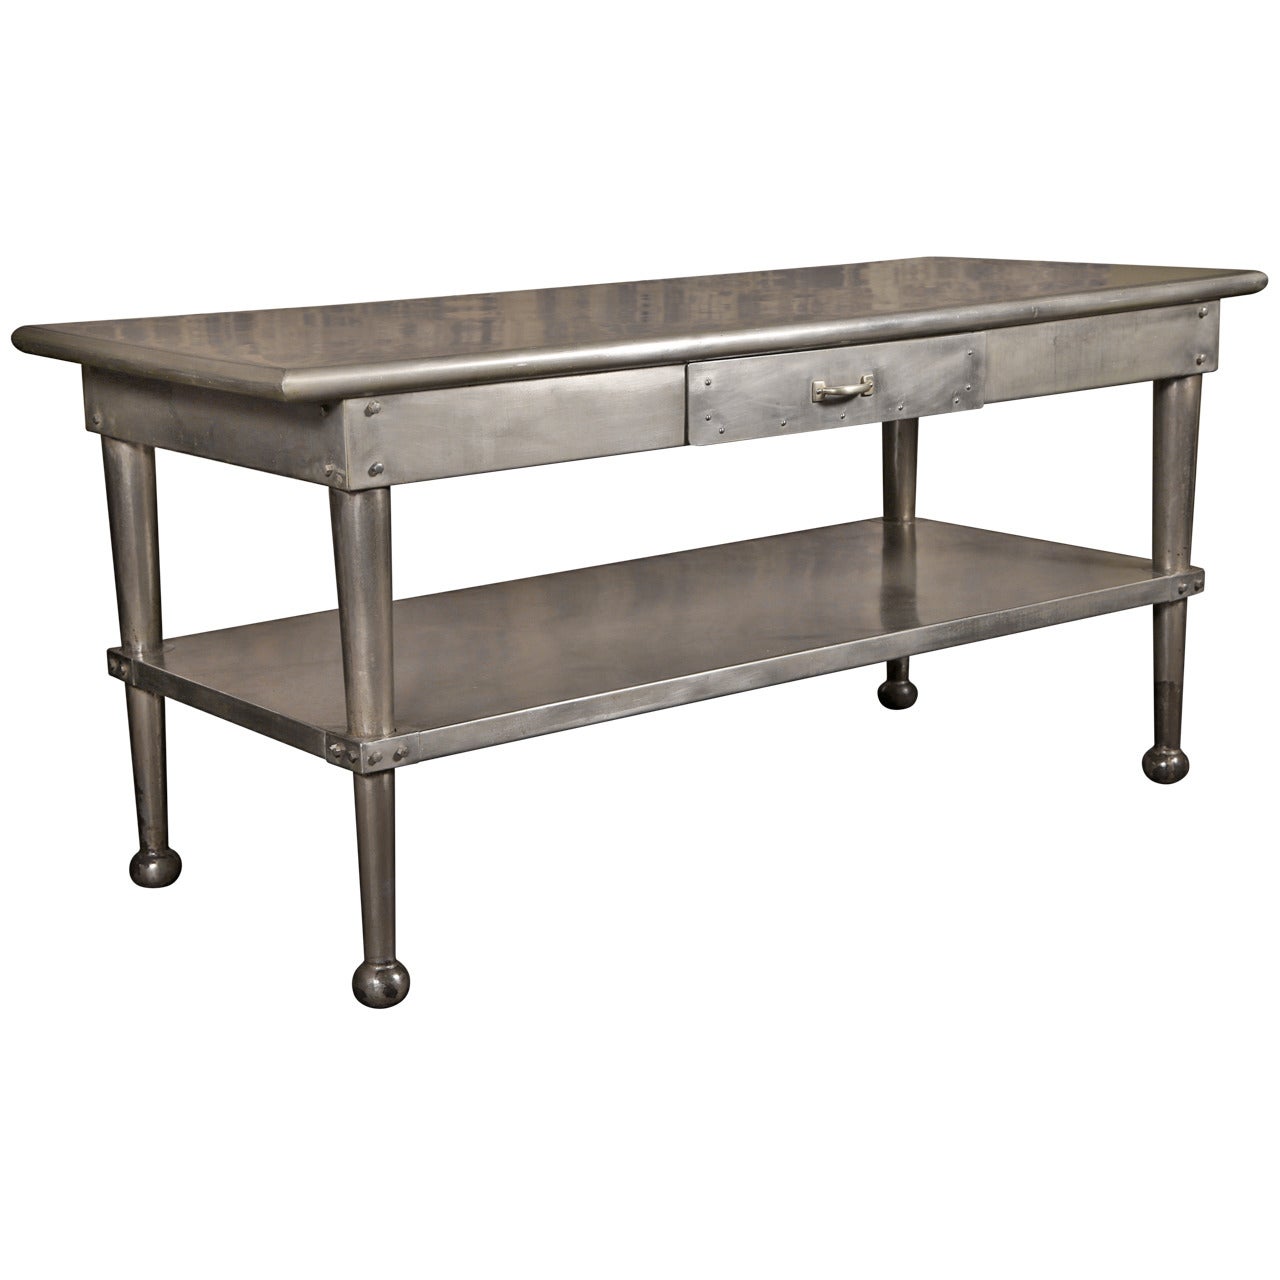 Vintage Stainless Steel Kitchen Table